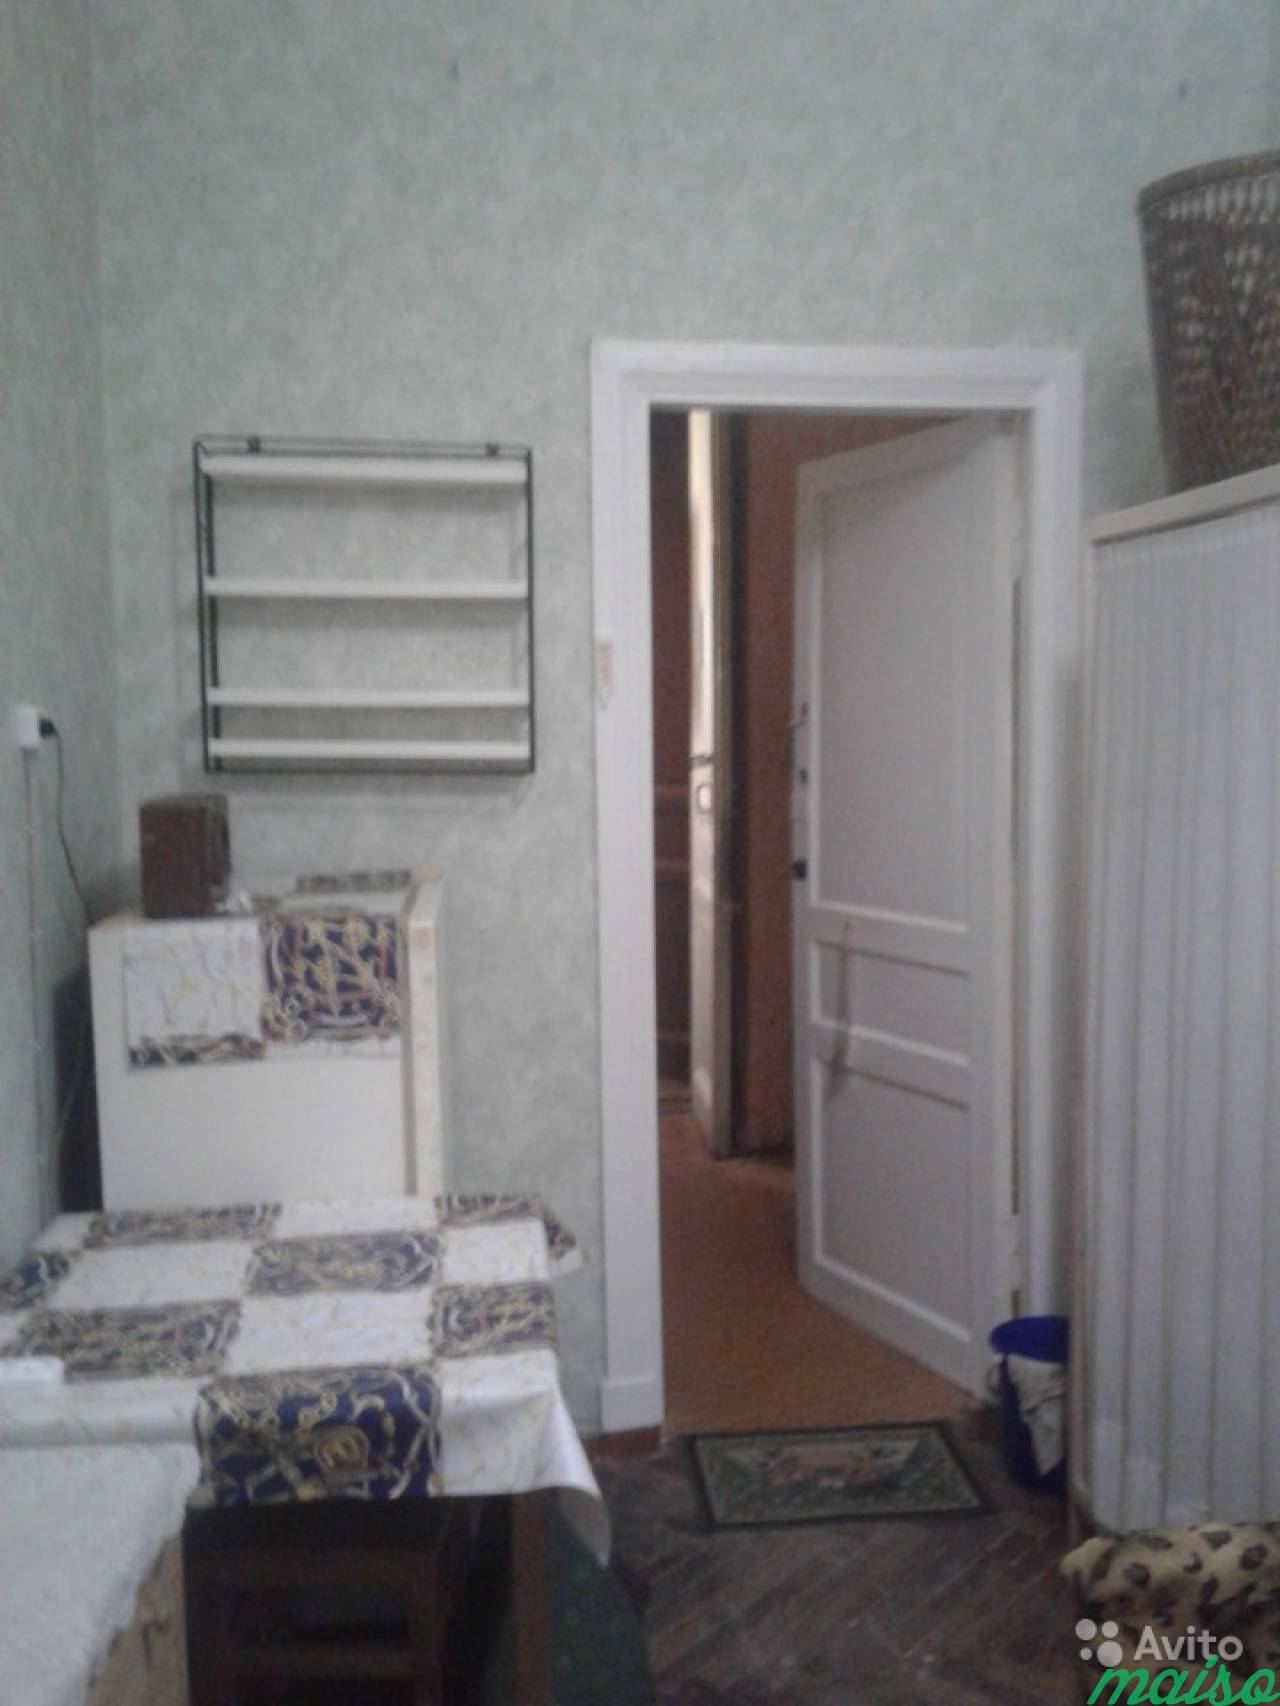 Комната 15 м² в 4-к, 3/5 эт. в Санкт-Петербурге. Фото 6